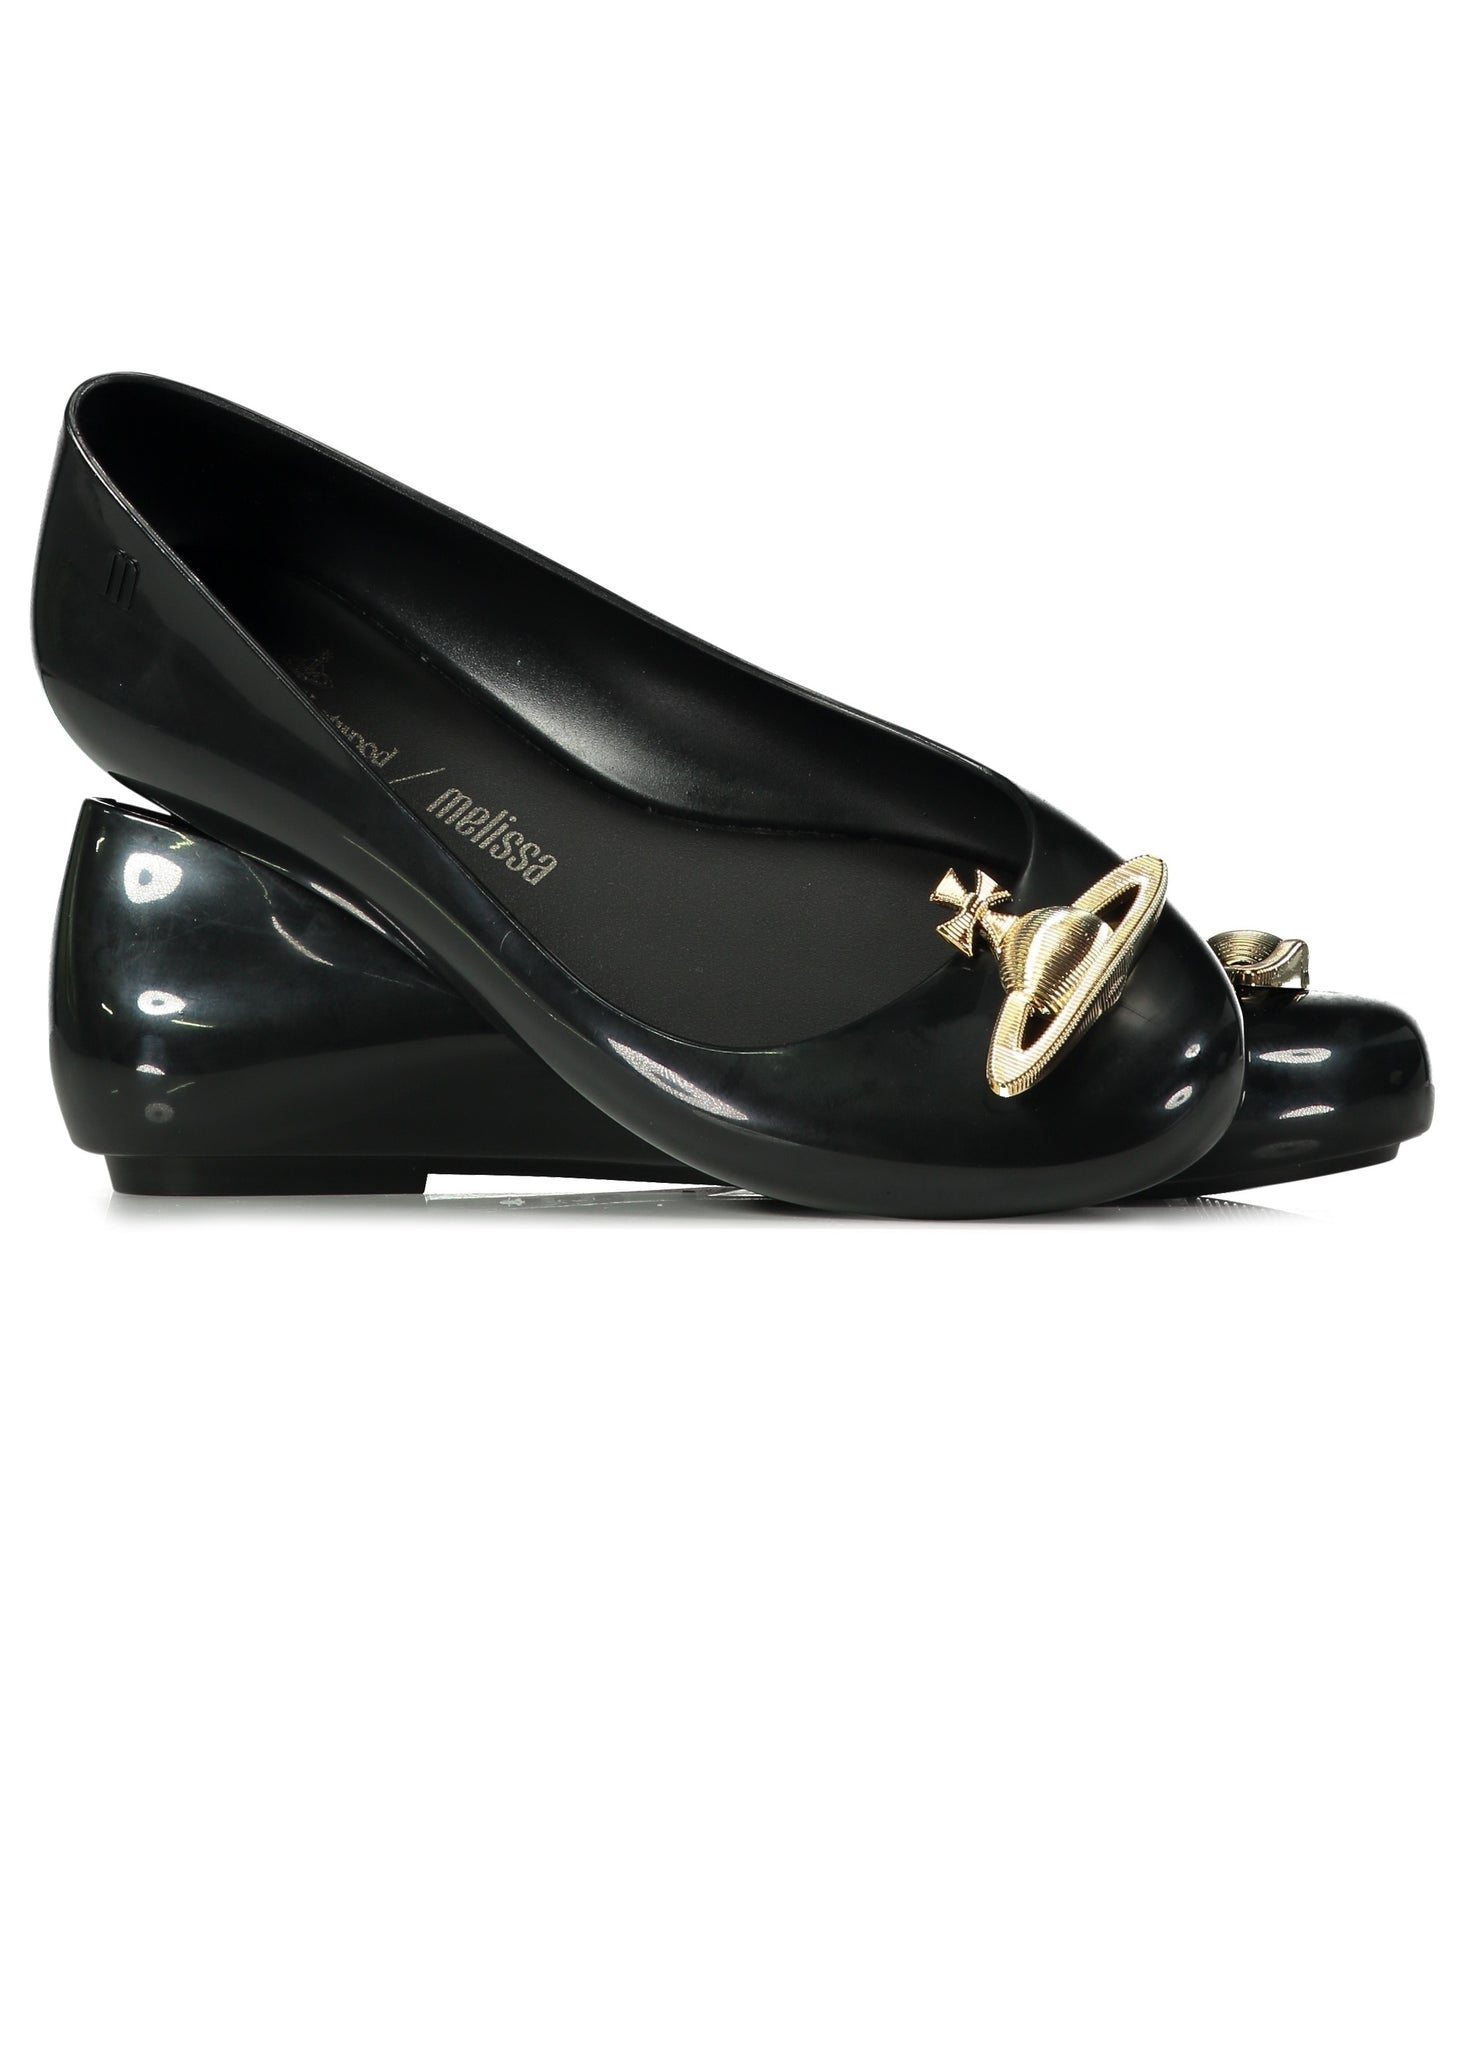 Vivienne Westwood Sweet Love Orb Shoe - Black/Gold